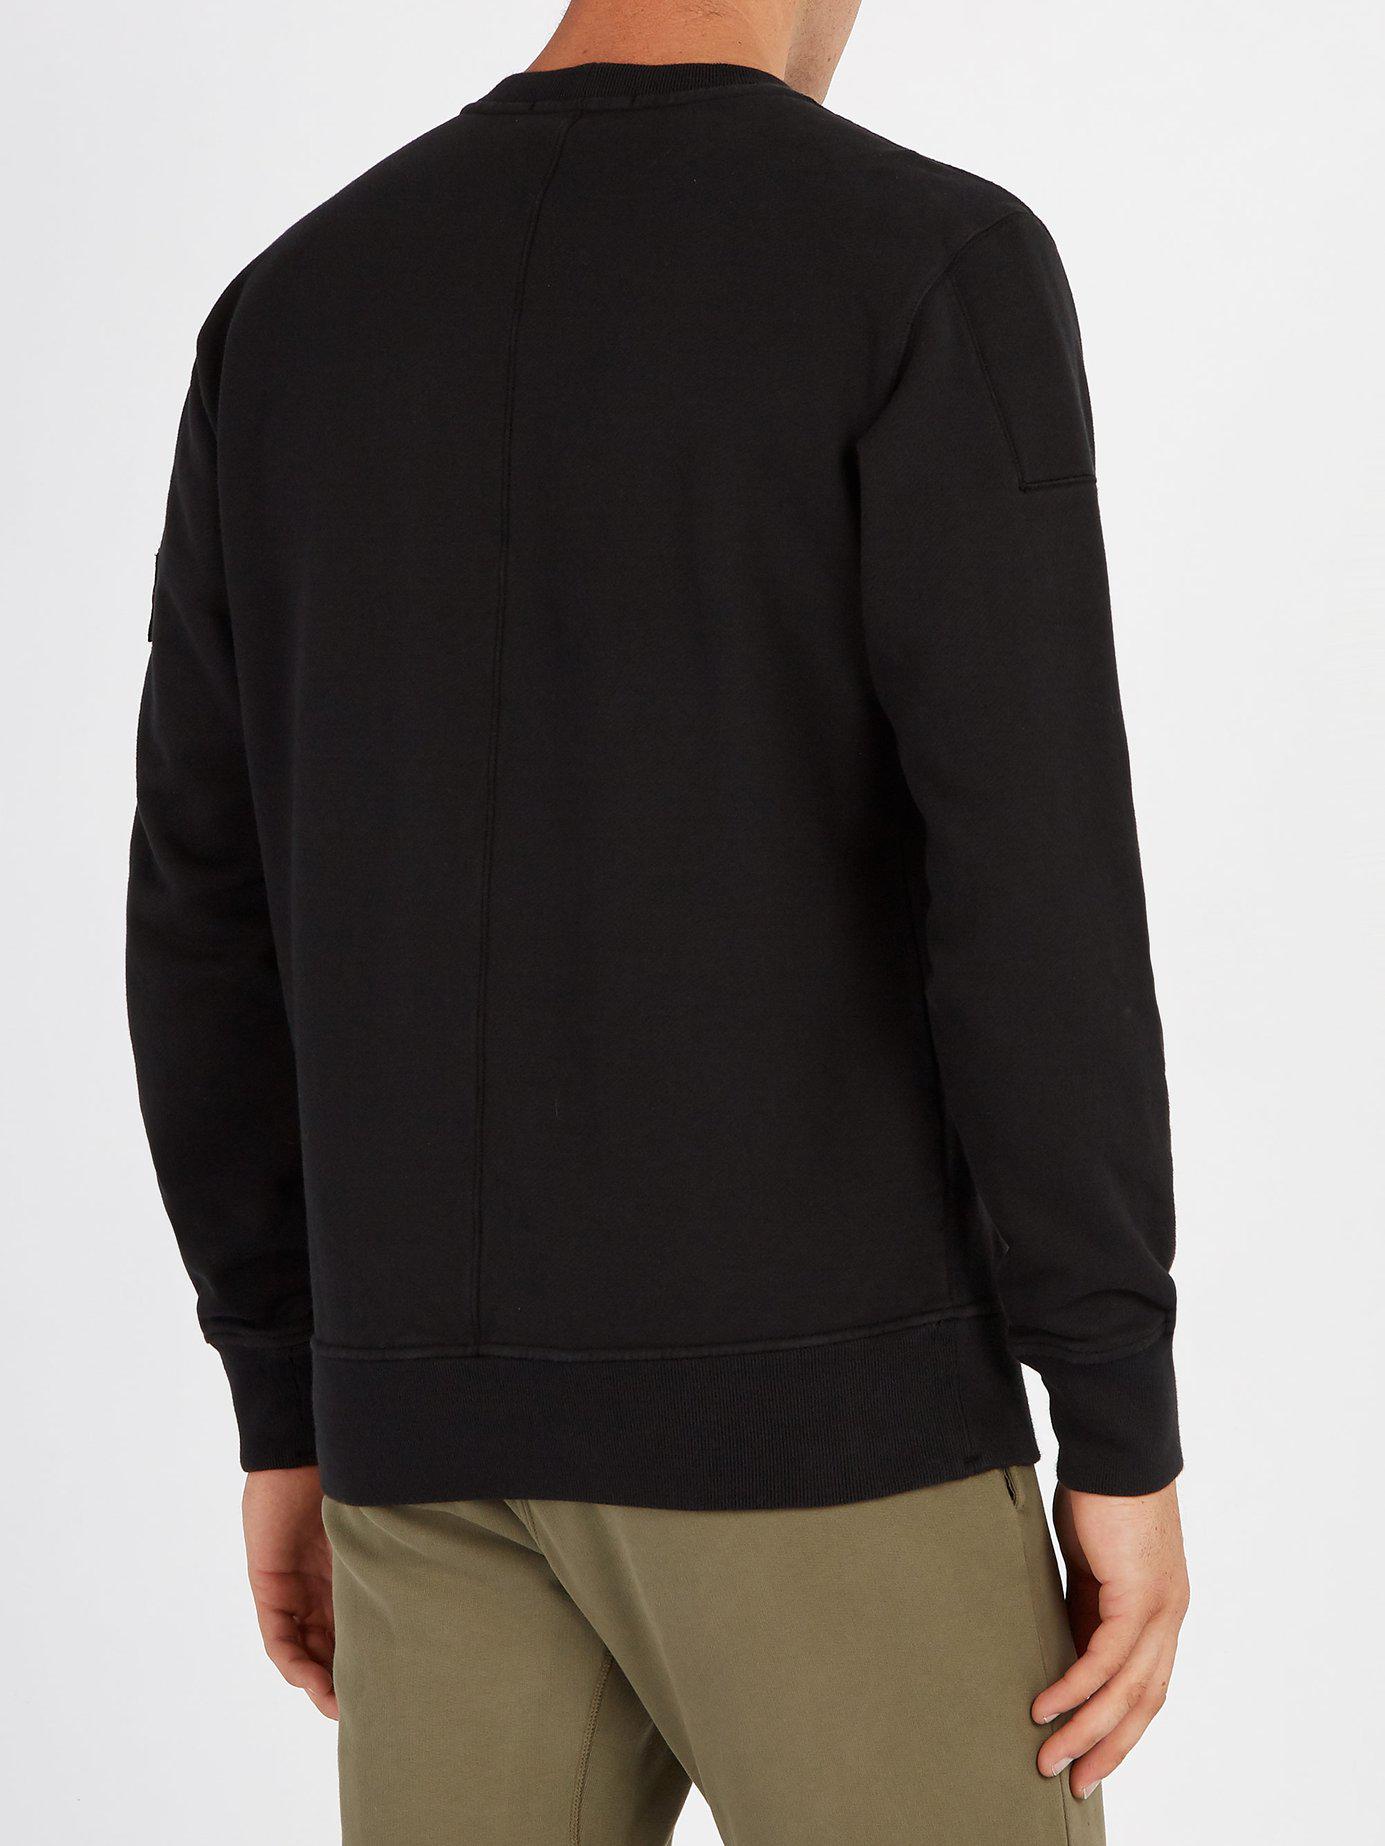 Stone Island Crew-neck Zip-pocket Cotton Sweatshirt in Black for Men - Lyst